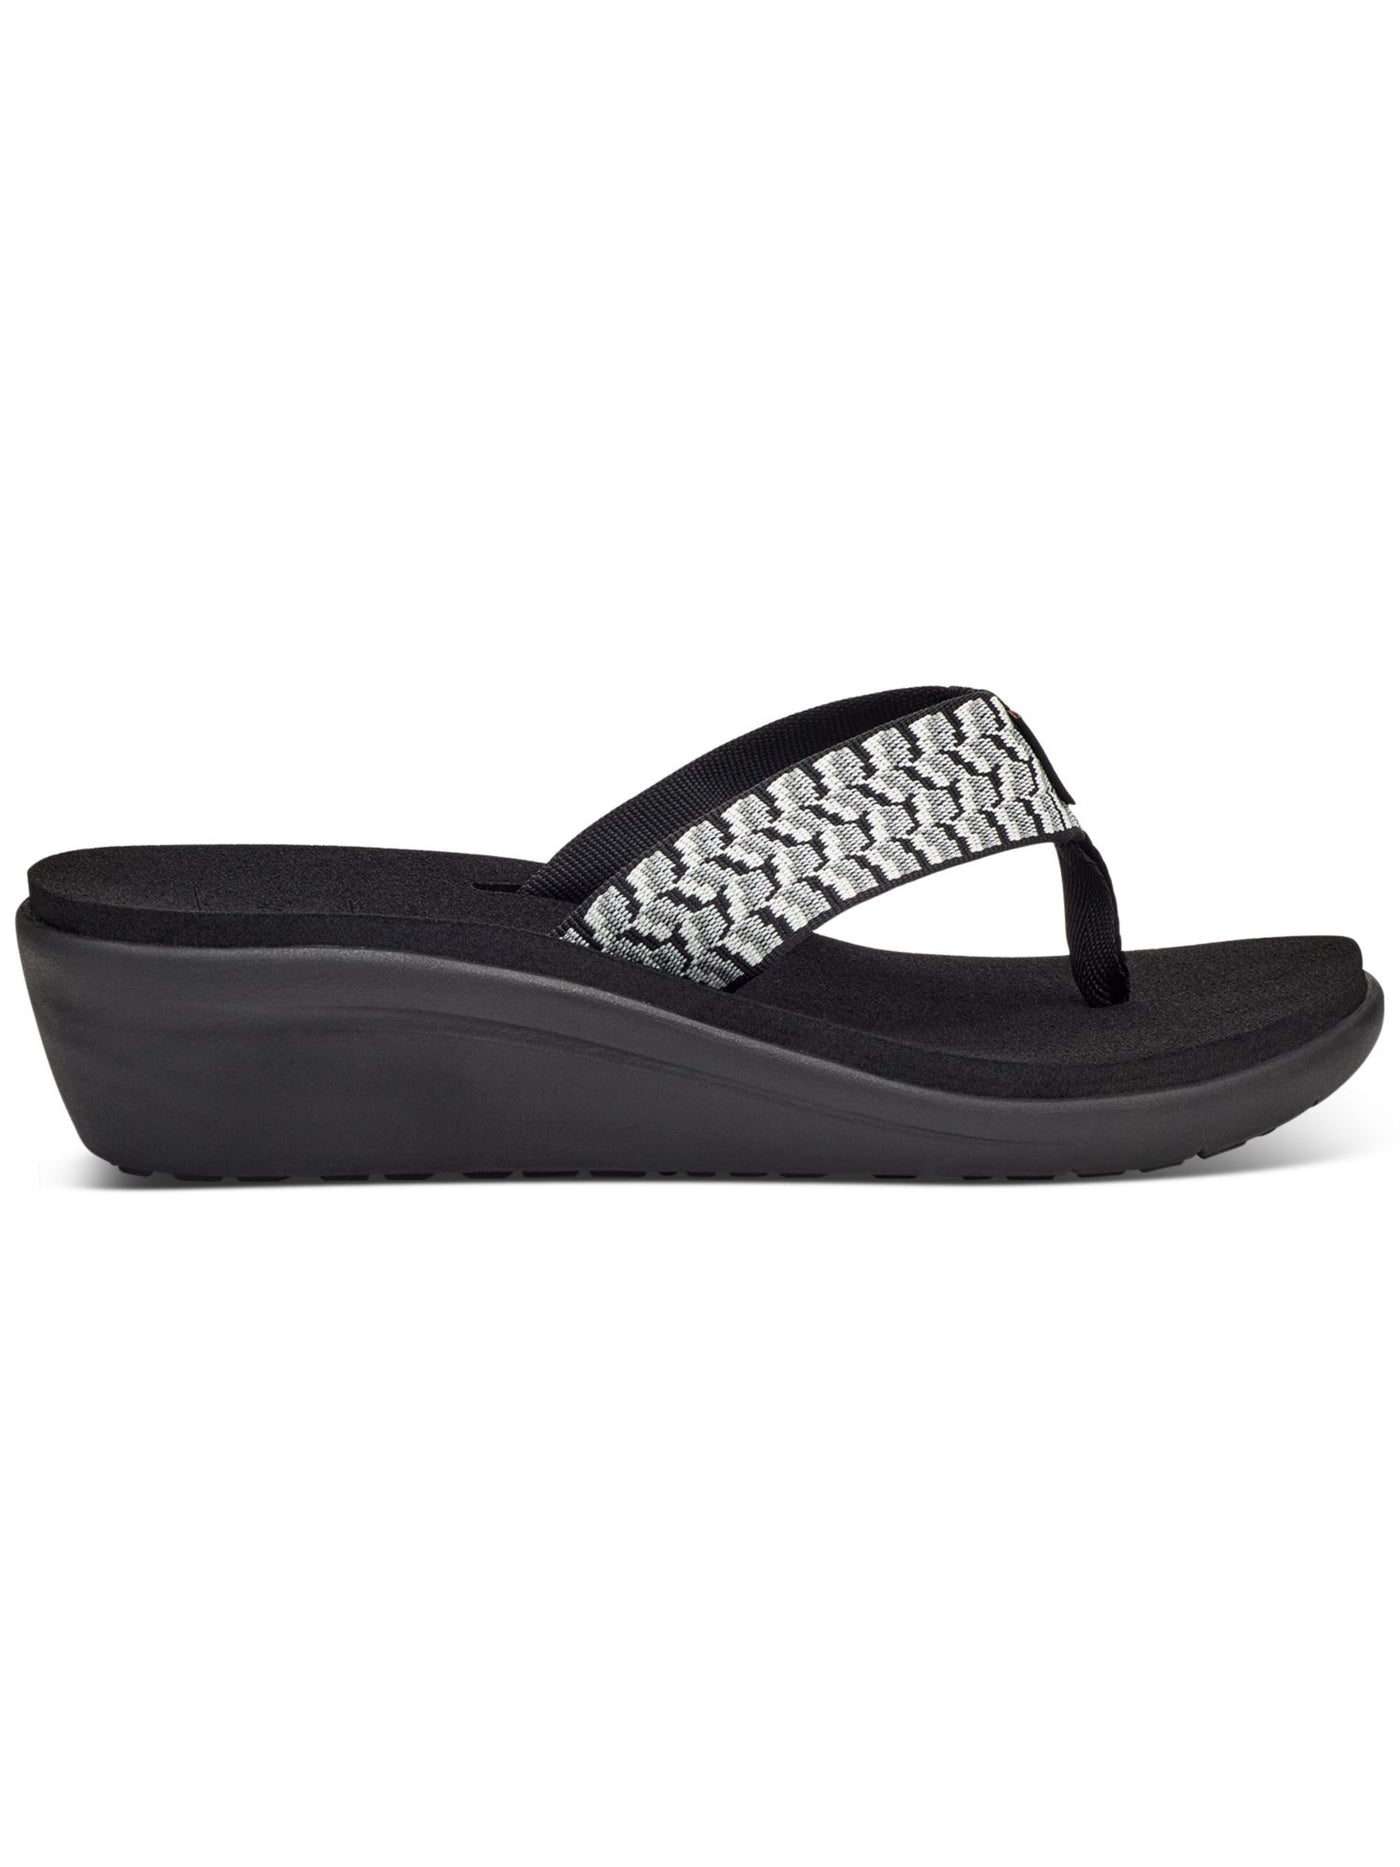 TEVA Womens Black Printed Antimicrobial Quickdry Voya Round Toe Platform Slip On Thong Sandals Shoes 11